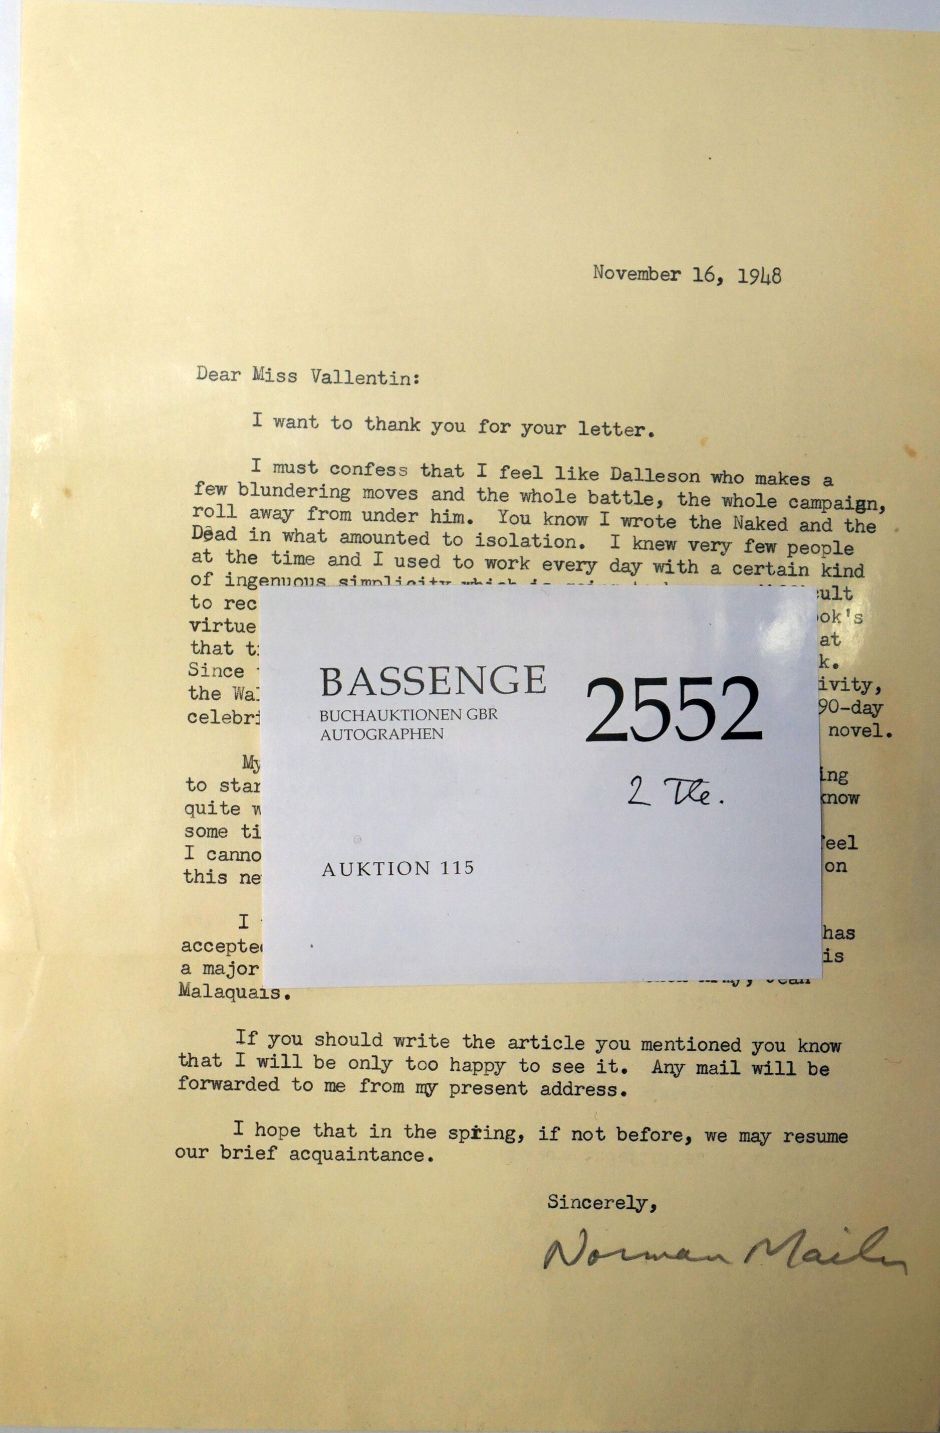 Lot 2552, Auction  115, Mailer, Norman, Brief 1948 an Antonina Vallentin